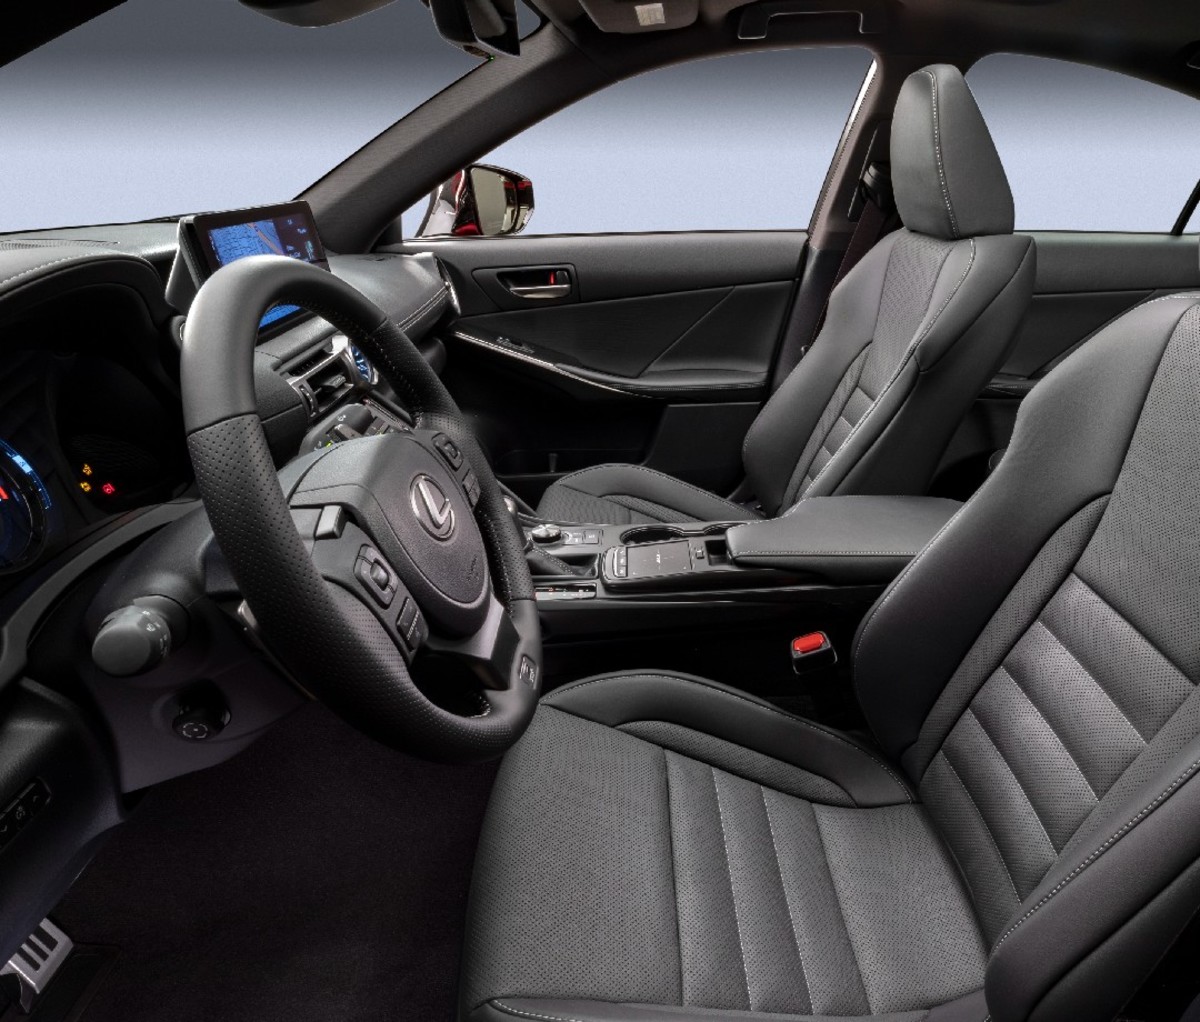 Interior of the Lexus IS 500